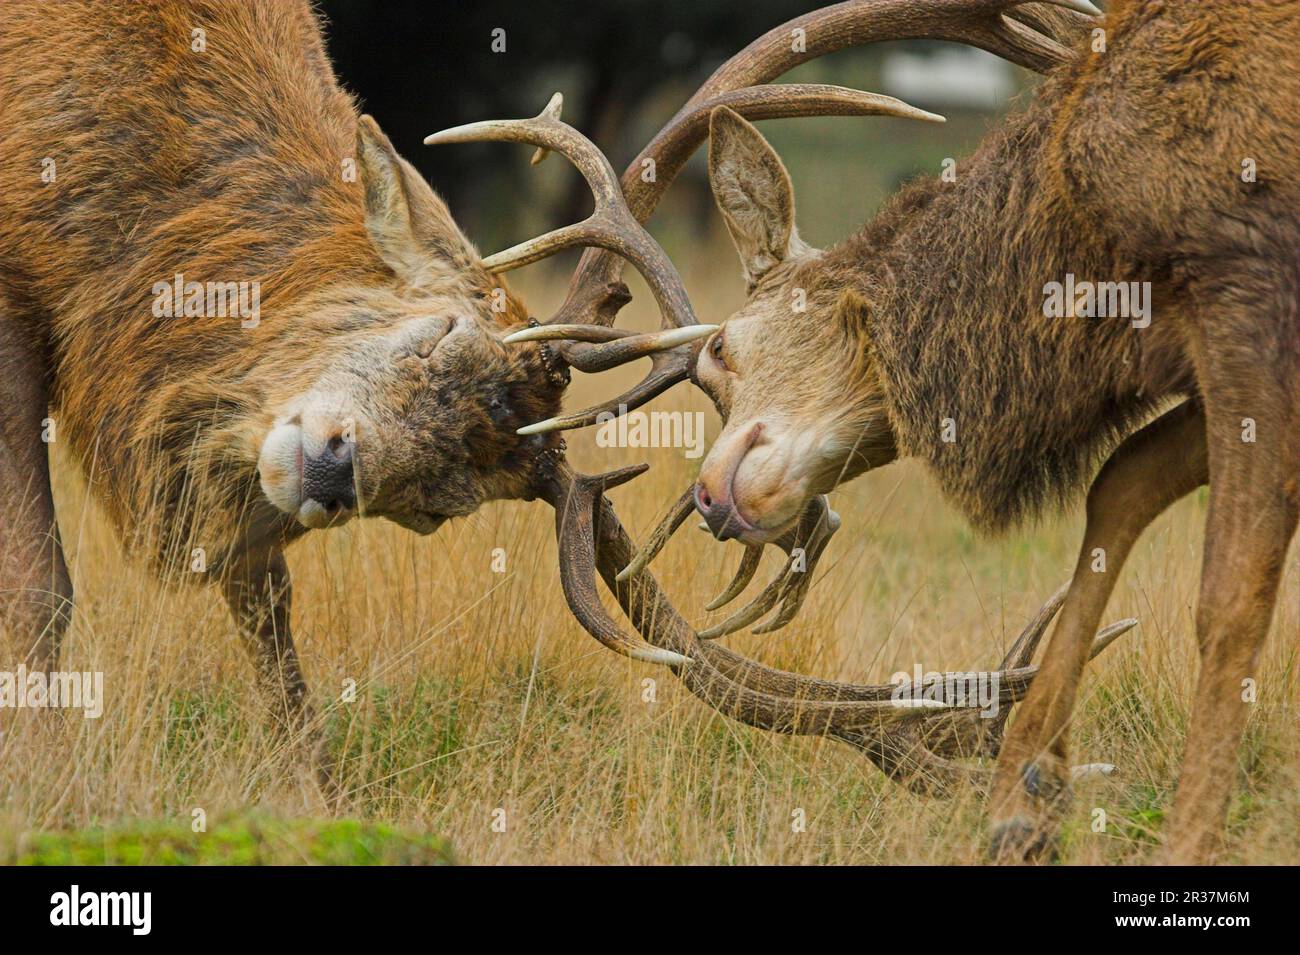 Red deer (Cervus elaphus) Deer in heat, close-up of heads with closed antlers Stock Photo